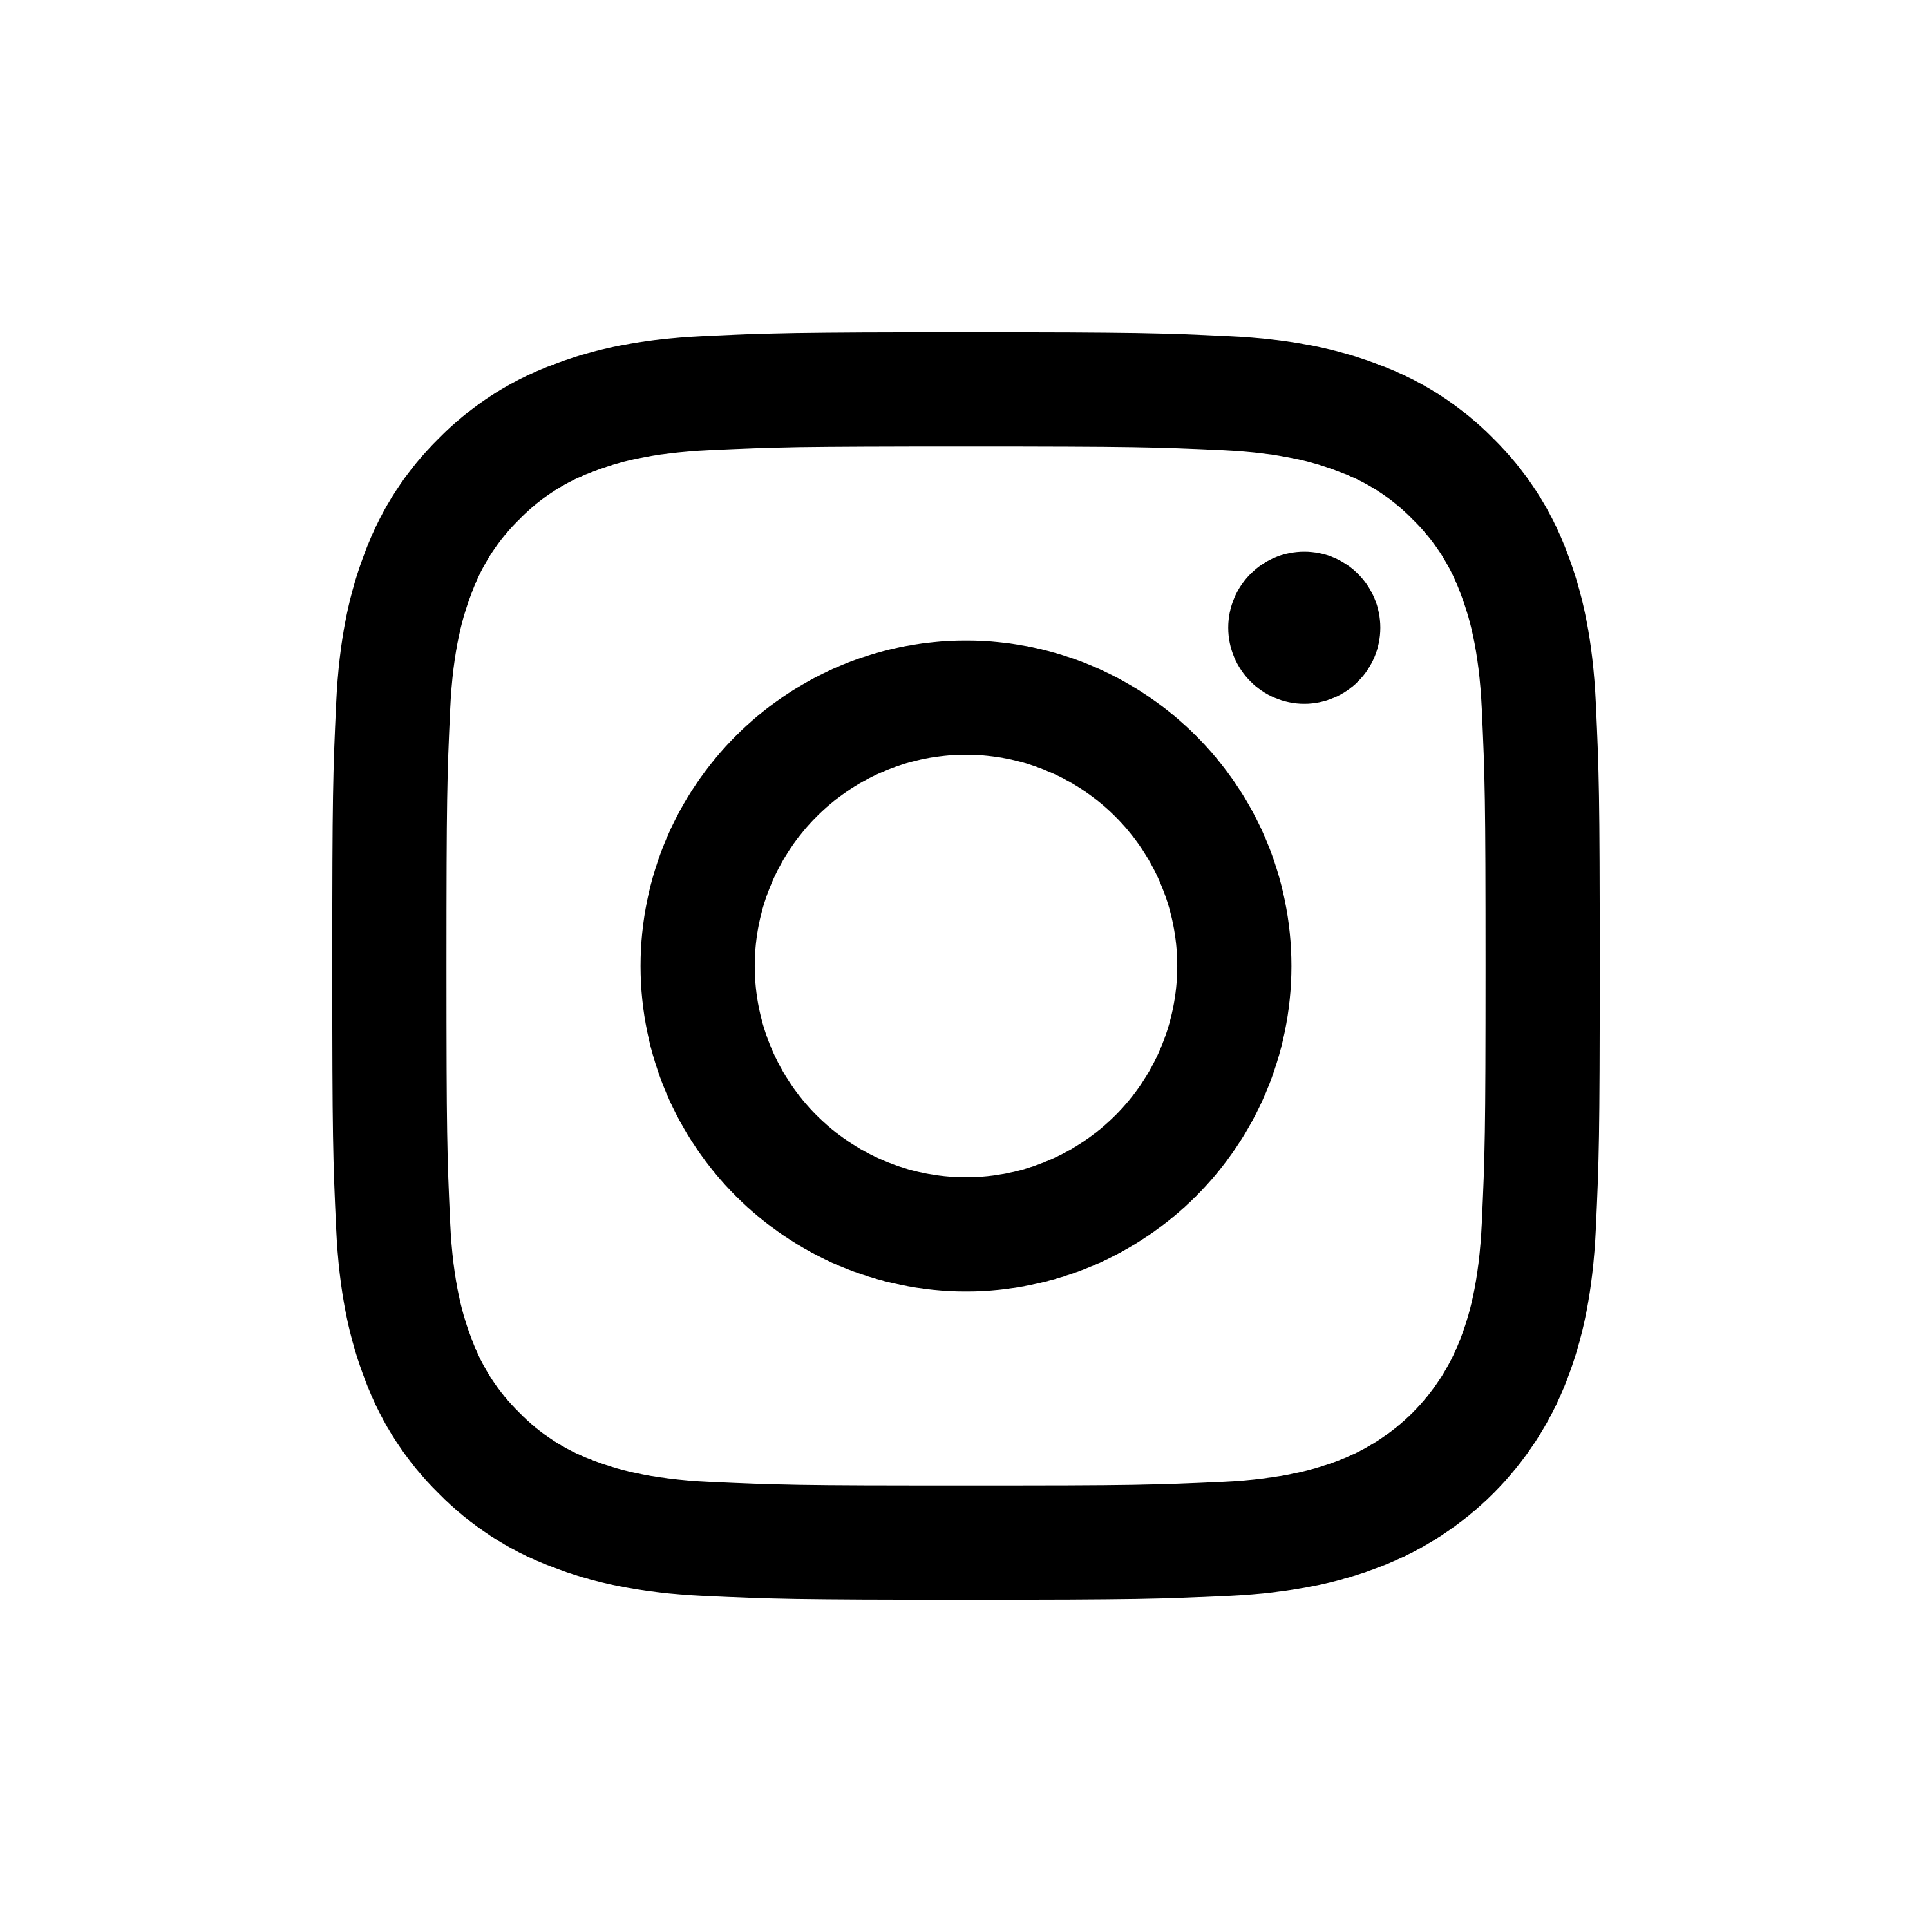 The White Logo - Instagram App Black And White Logo Png Images